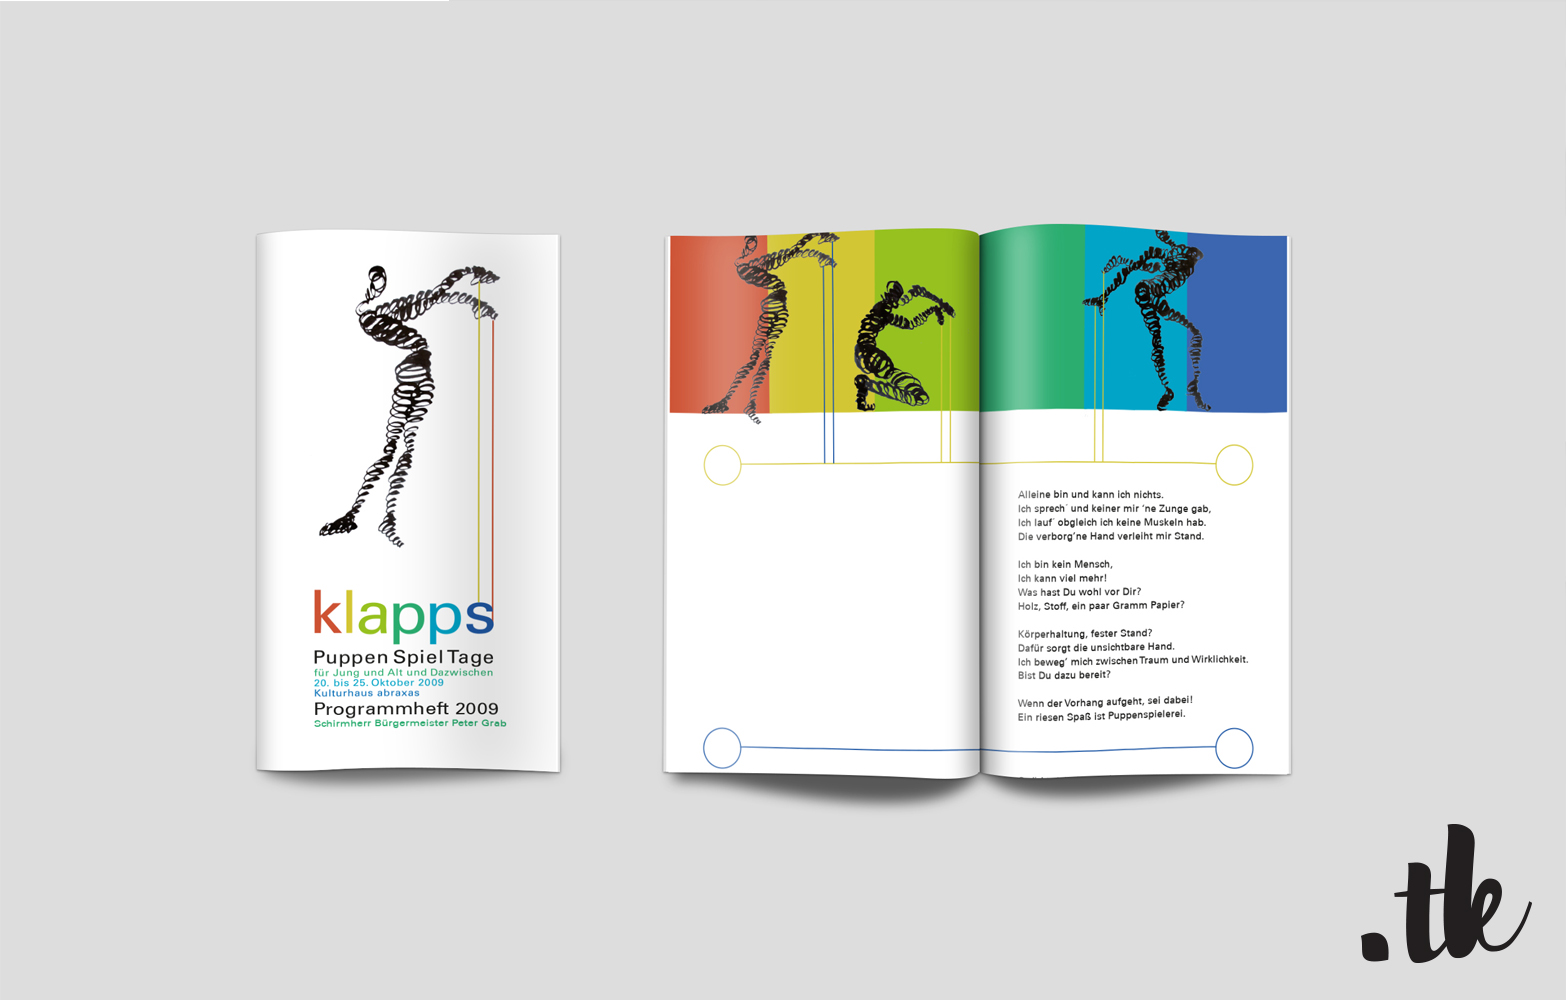 klapps puppenspieltage, Augsburger puppenkiste, brochure design, editorial design by tanja kaiser